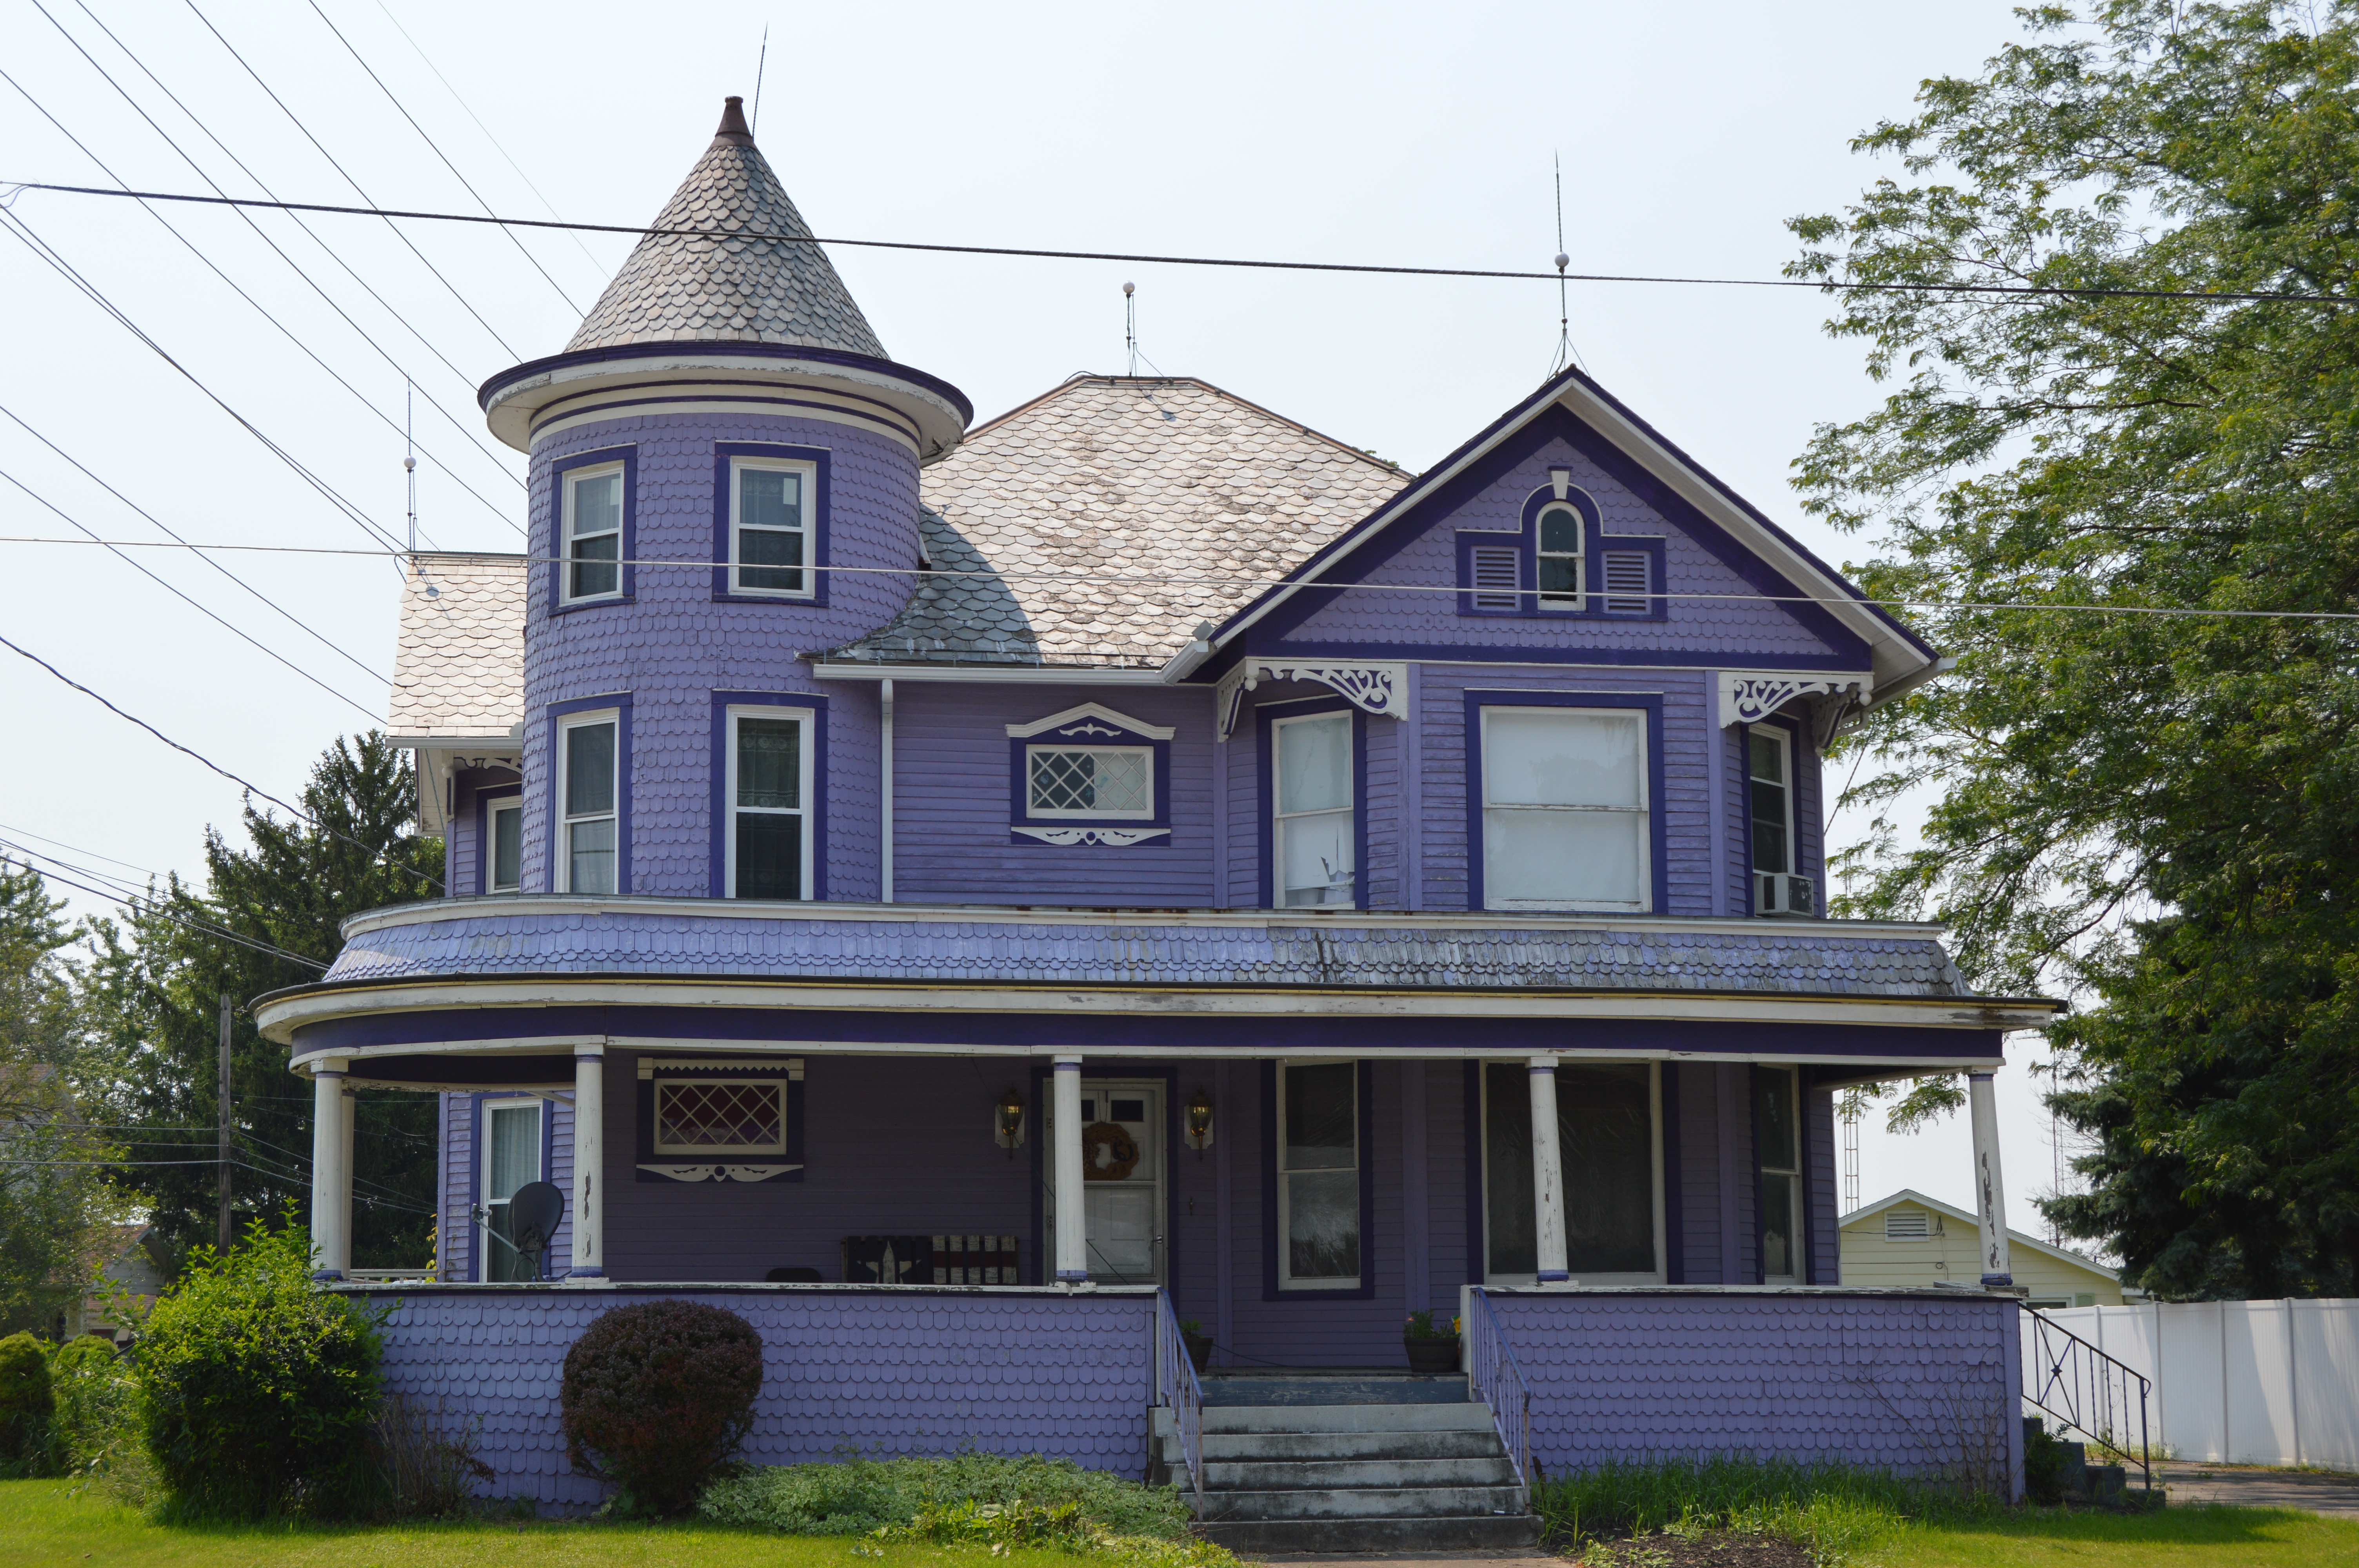 File:Dunkirk purple house.jpg - Wikimedia Commons